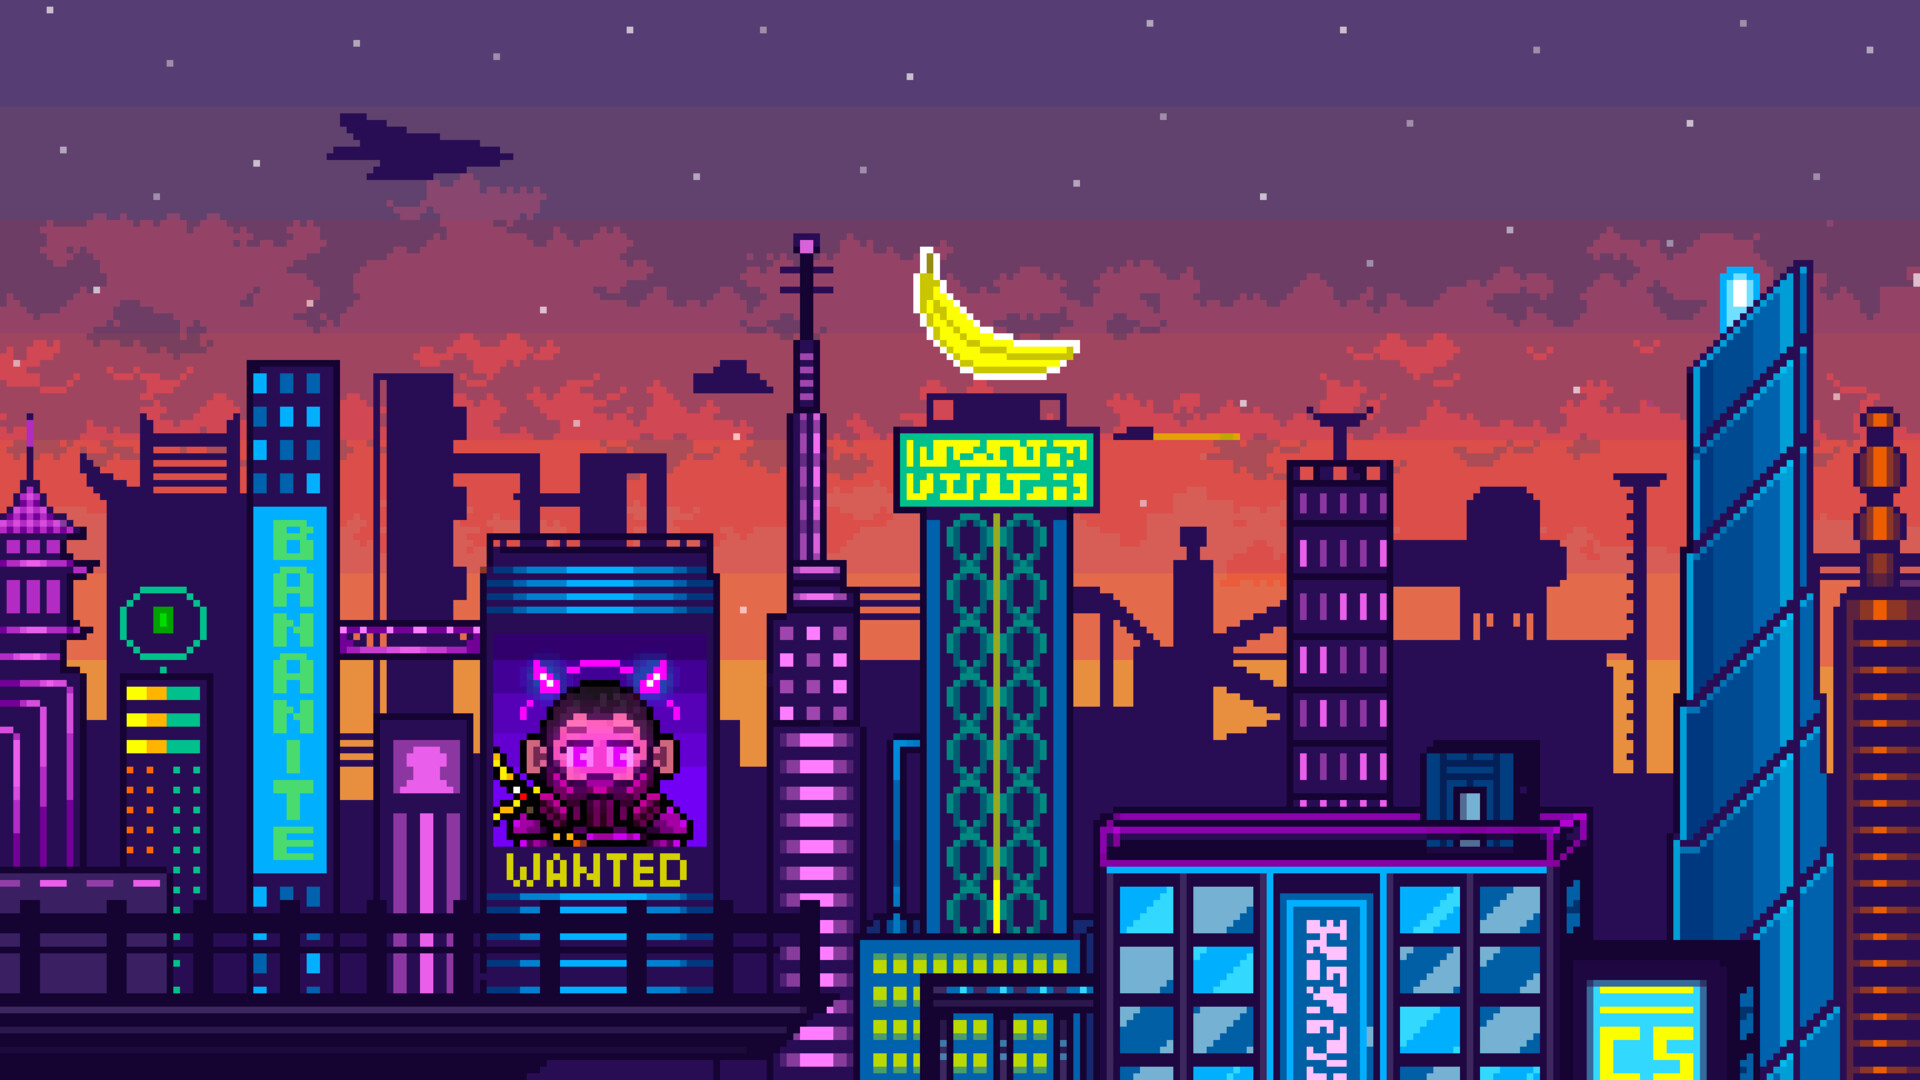 ArtStation - Sci-fi City Skyline - Pixel Art animation